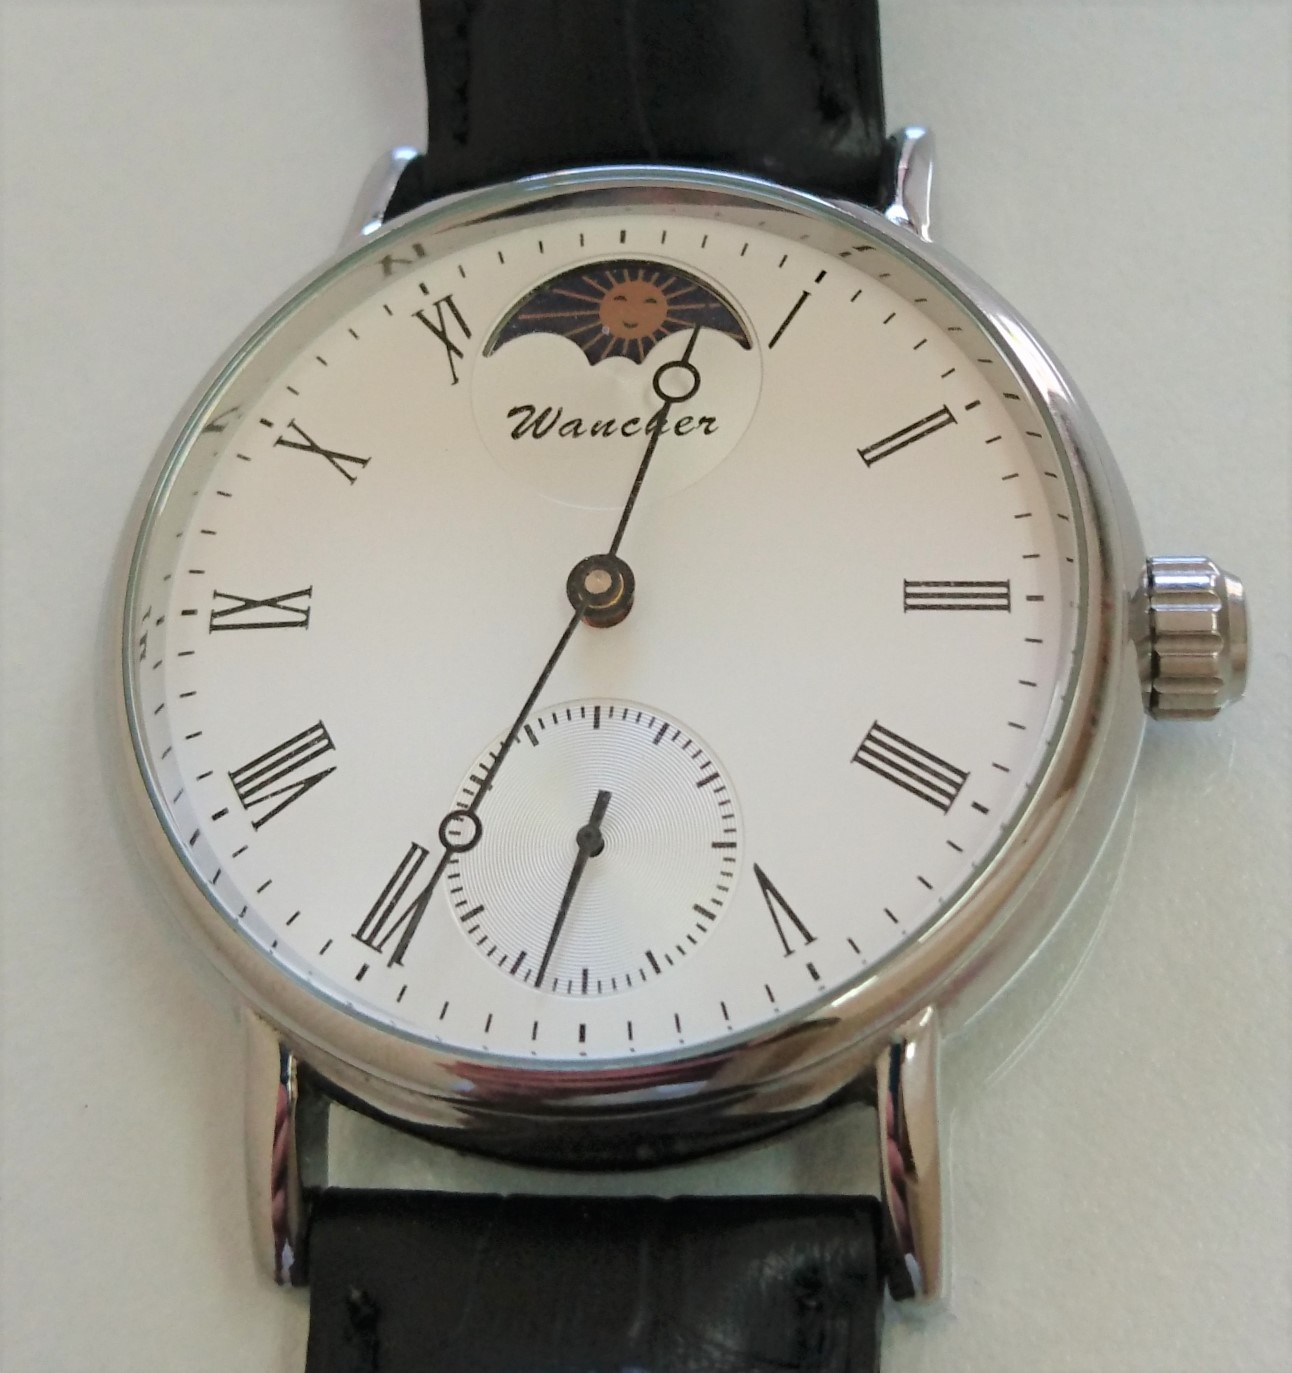 WANCHERデイ&ナイト クロノメーター ロービート機械手巻時計/950